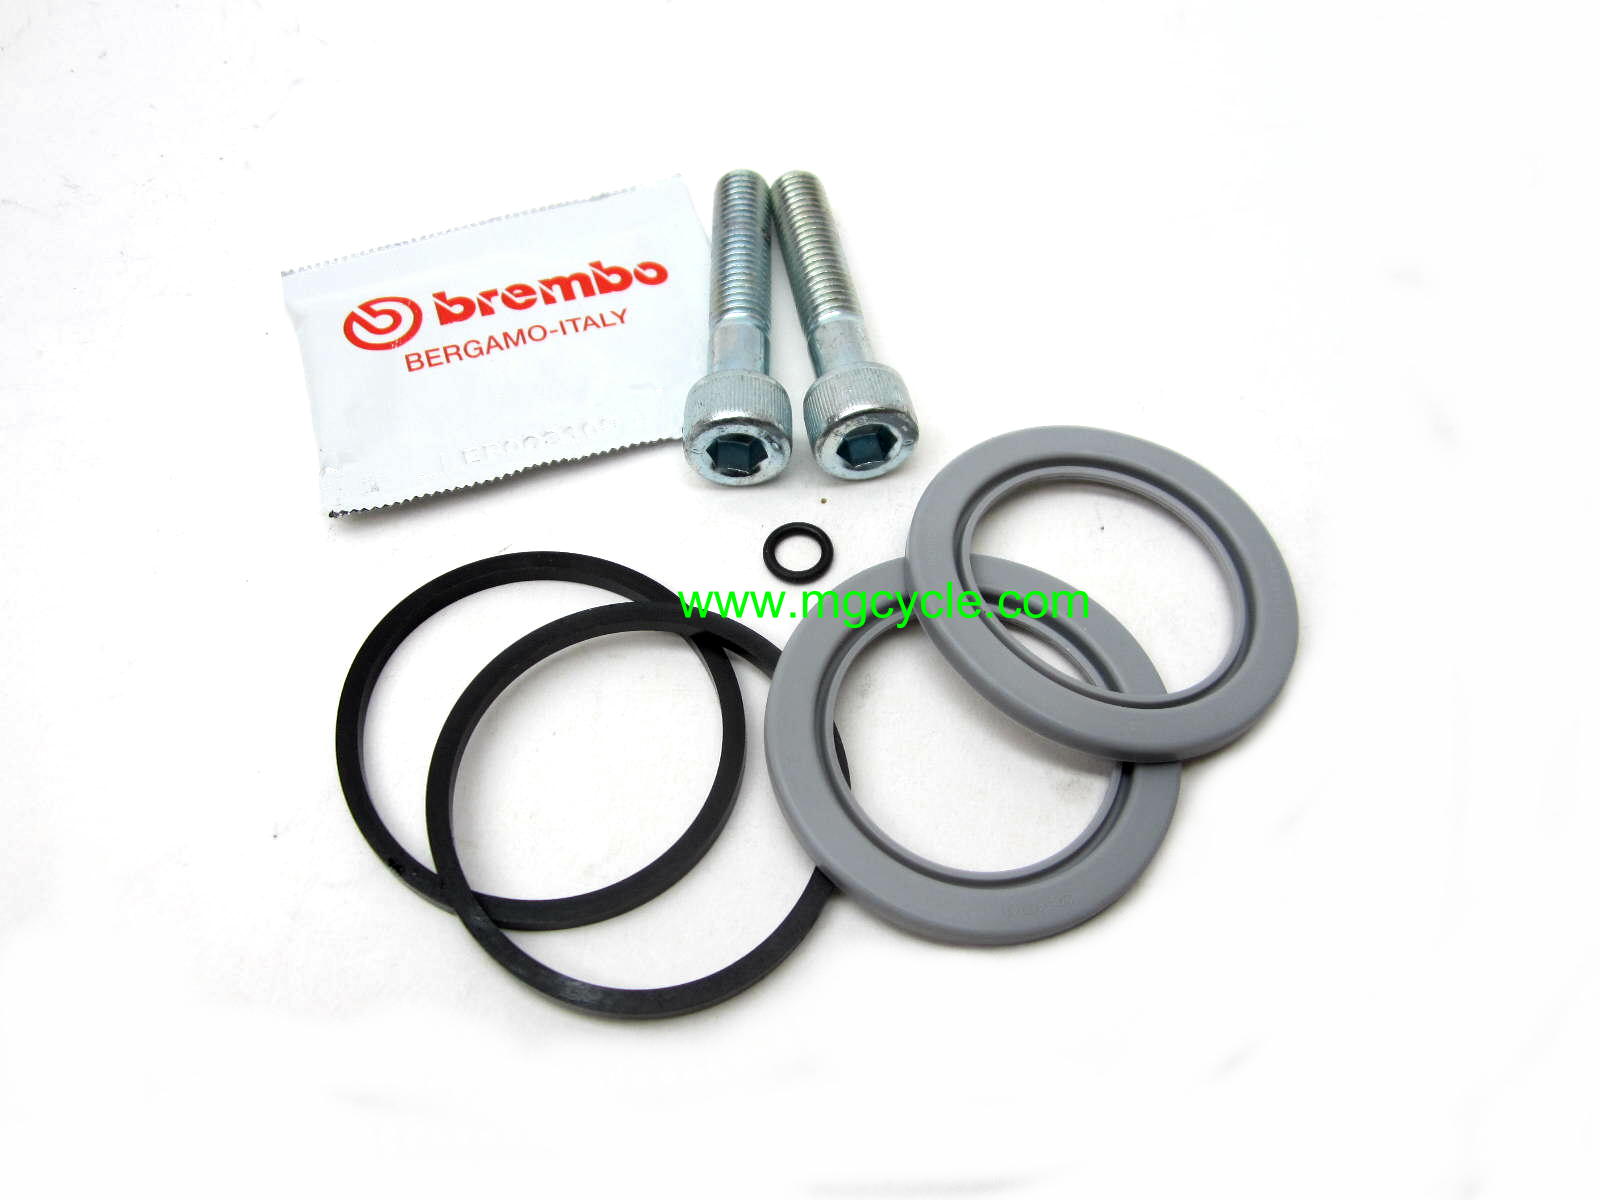 Brembo seal kit for 48mm F09 caliper SP1000 BMW GU18659050